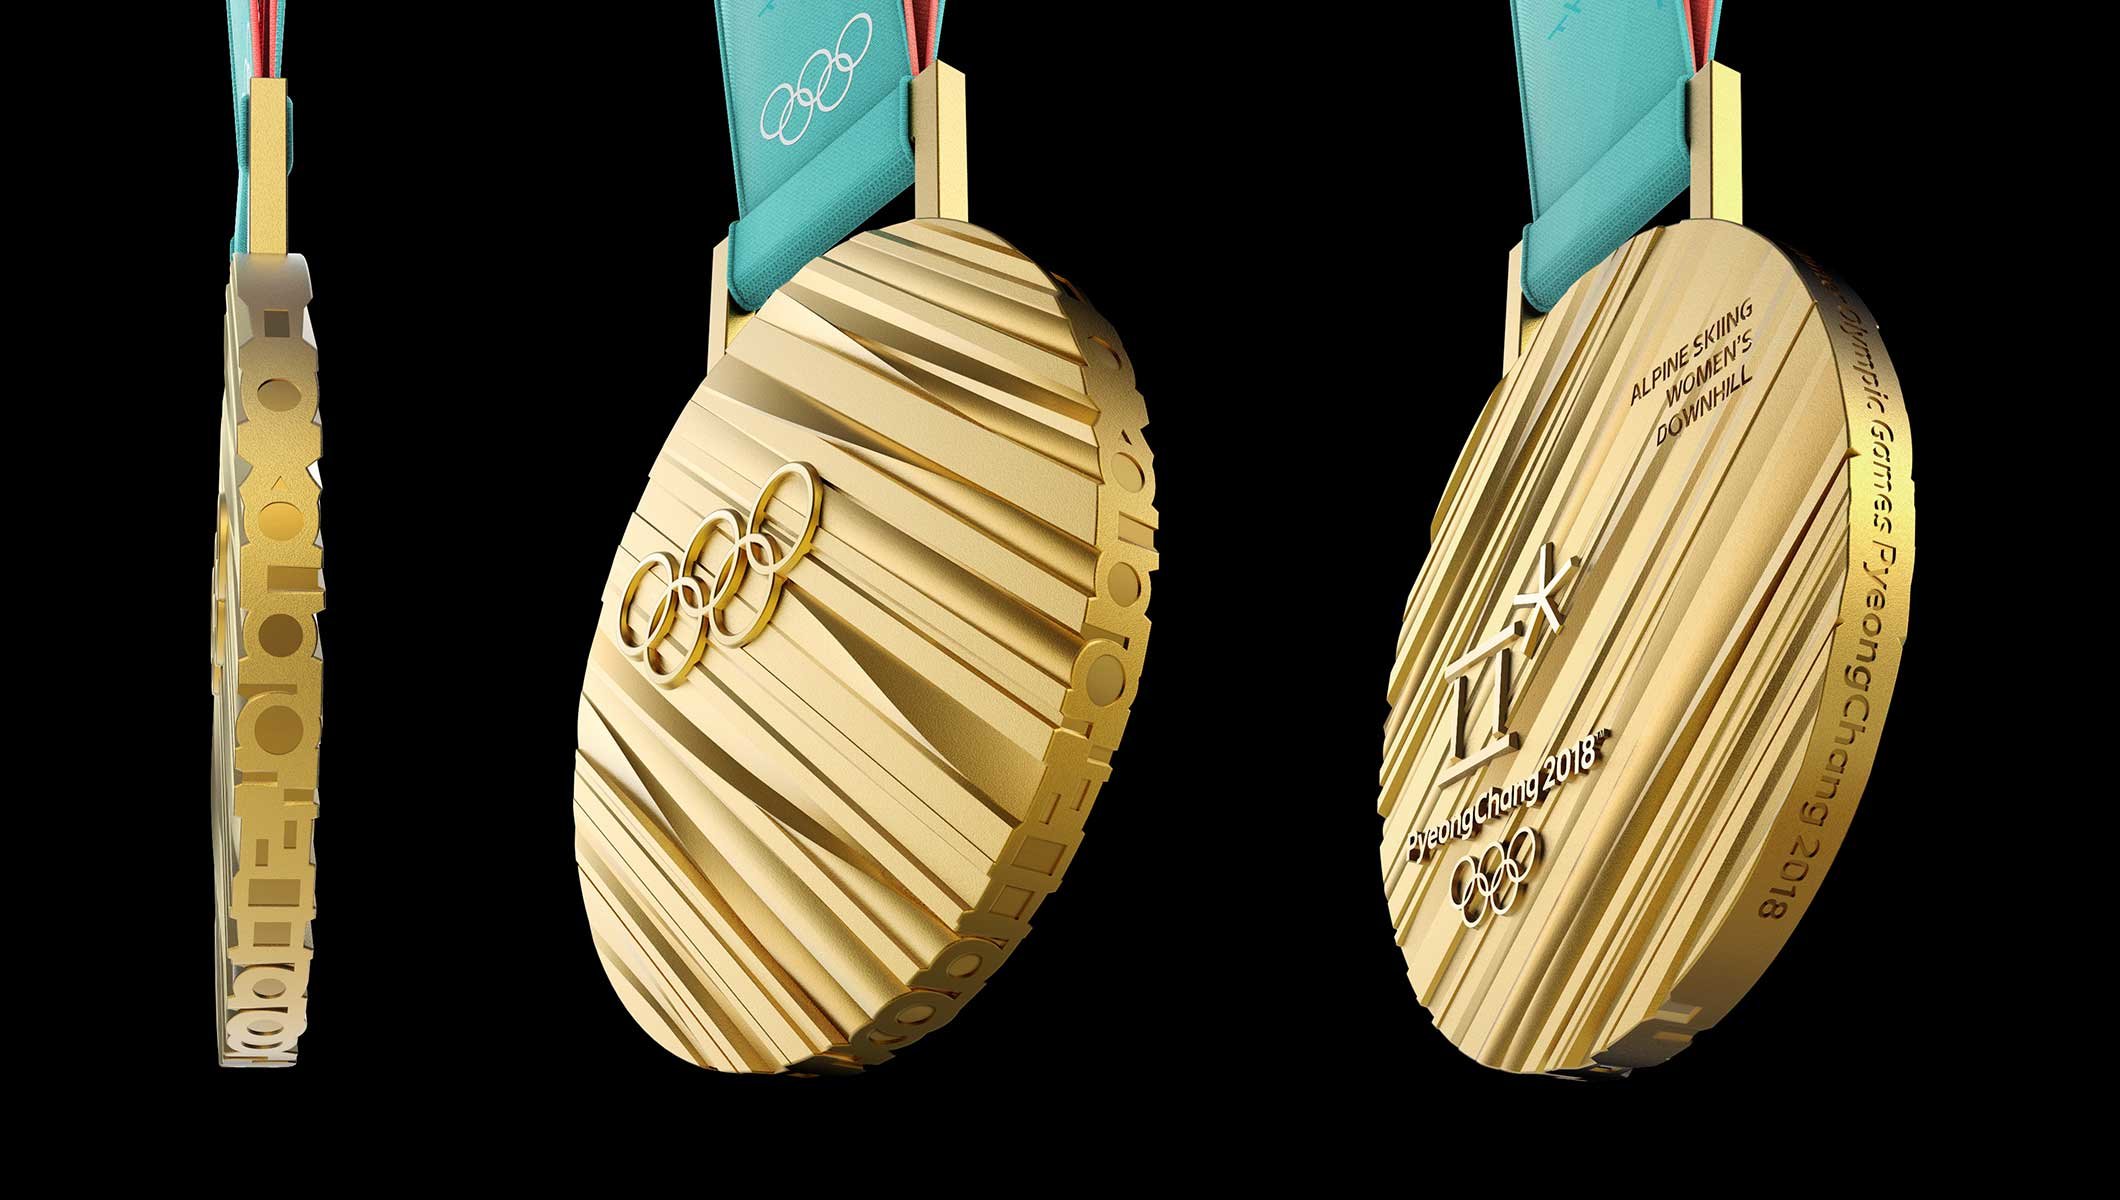 PyeongChang 2018 Winter Olympic Gold Medal